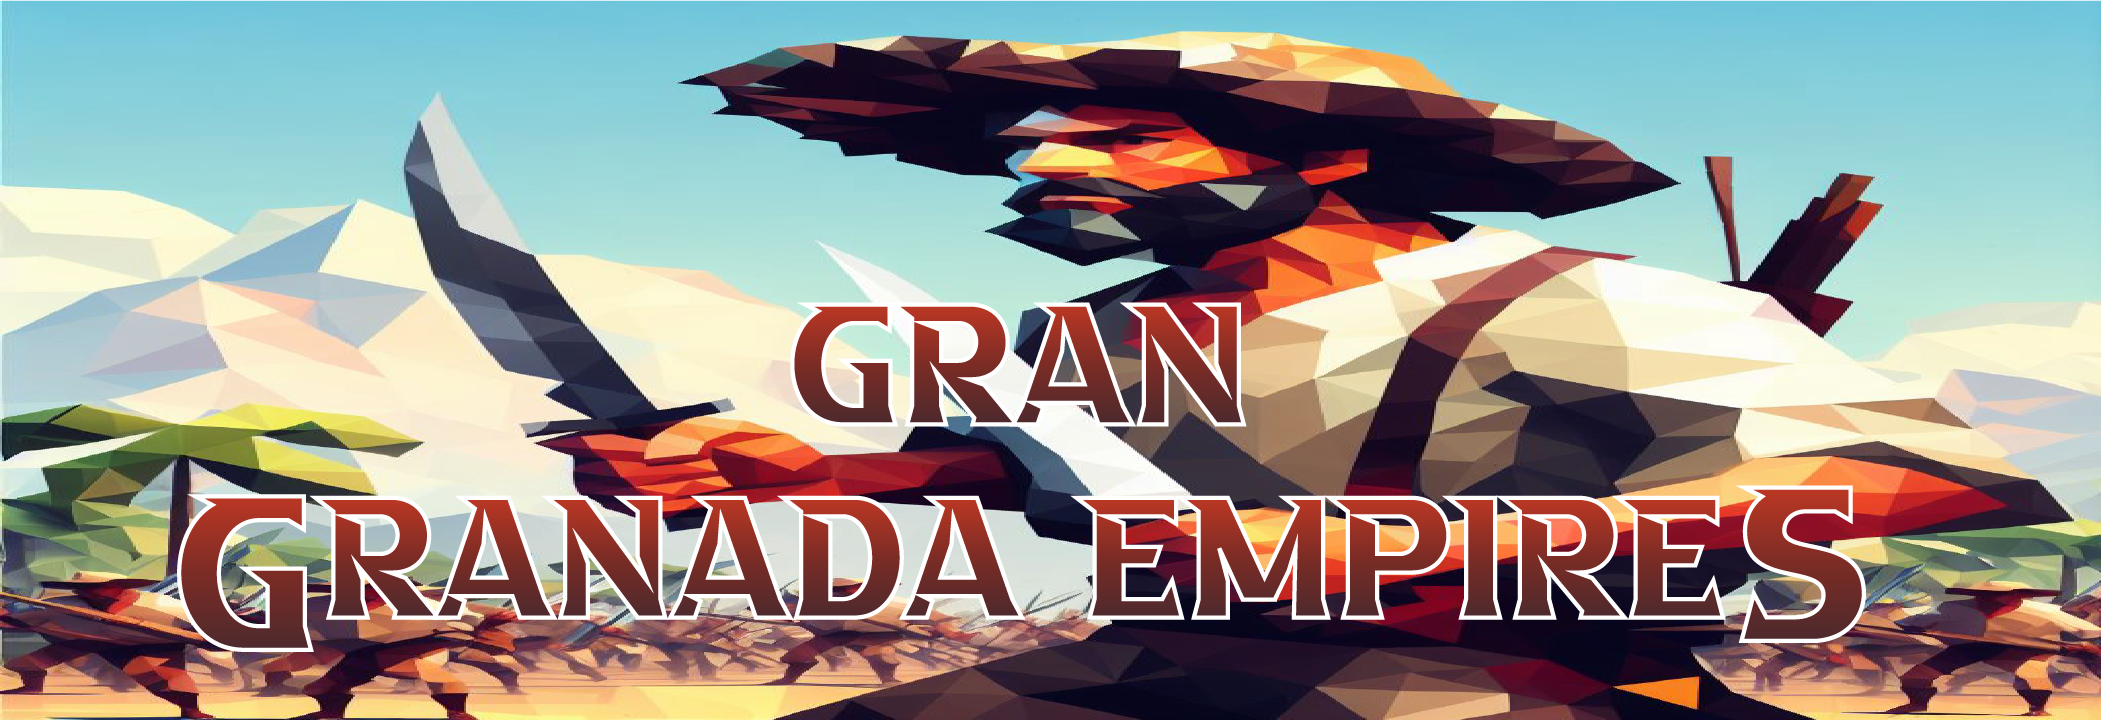 Gran Granada Empires